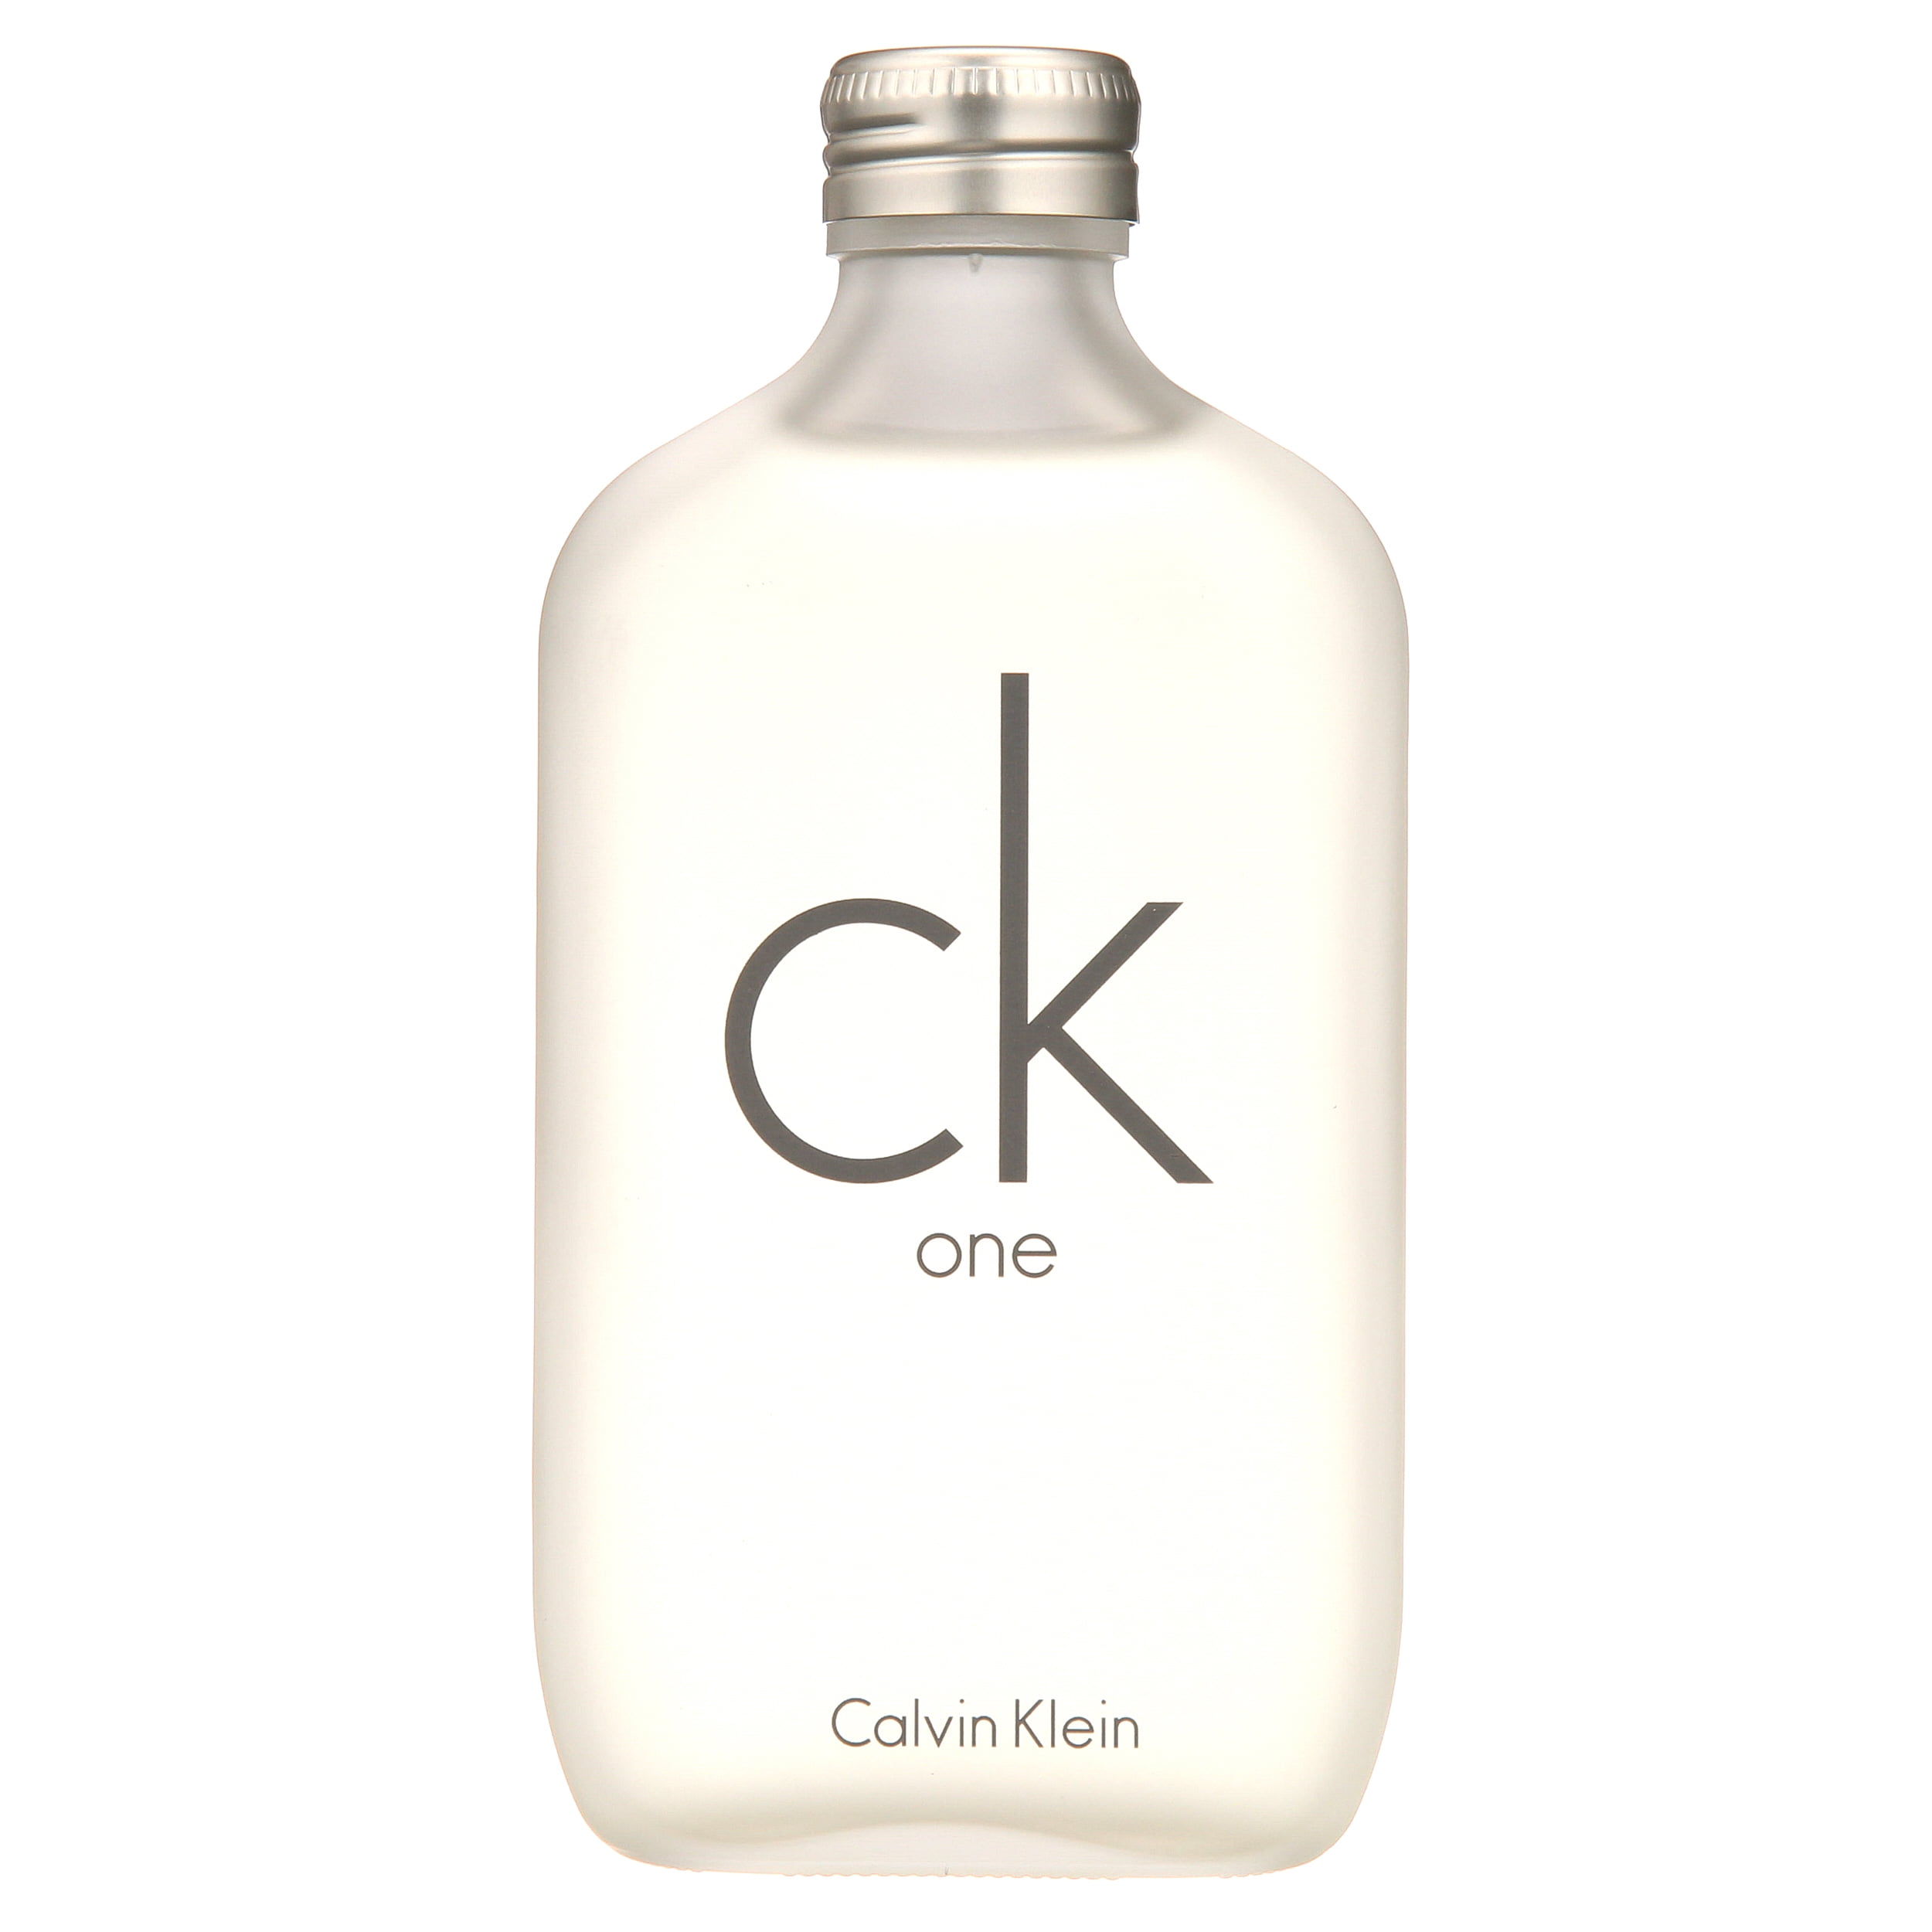 Calvin Klein Beauty CK One Eau Toilette, Unisex Fragrance, 6.7 Oz - Walmart.com